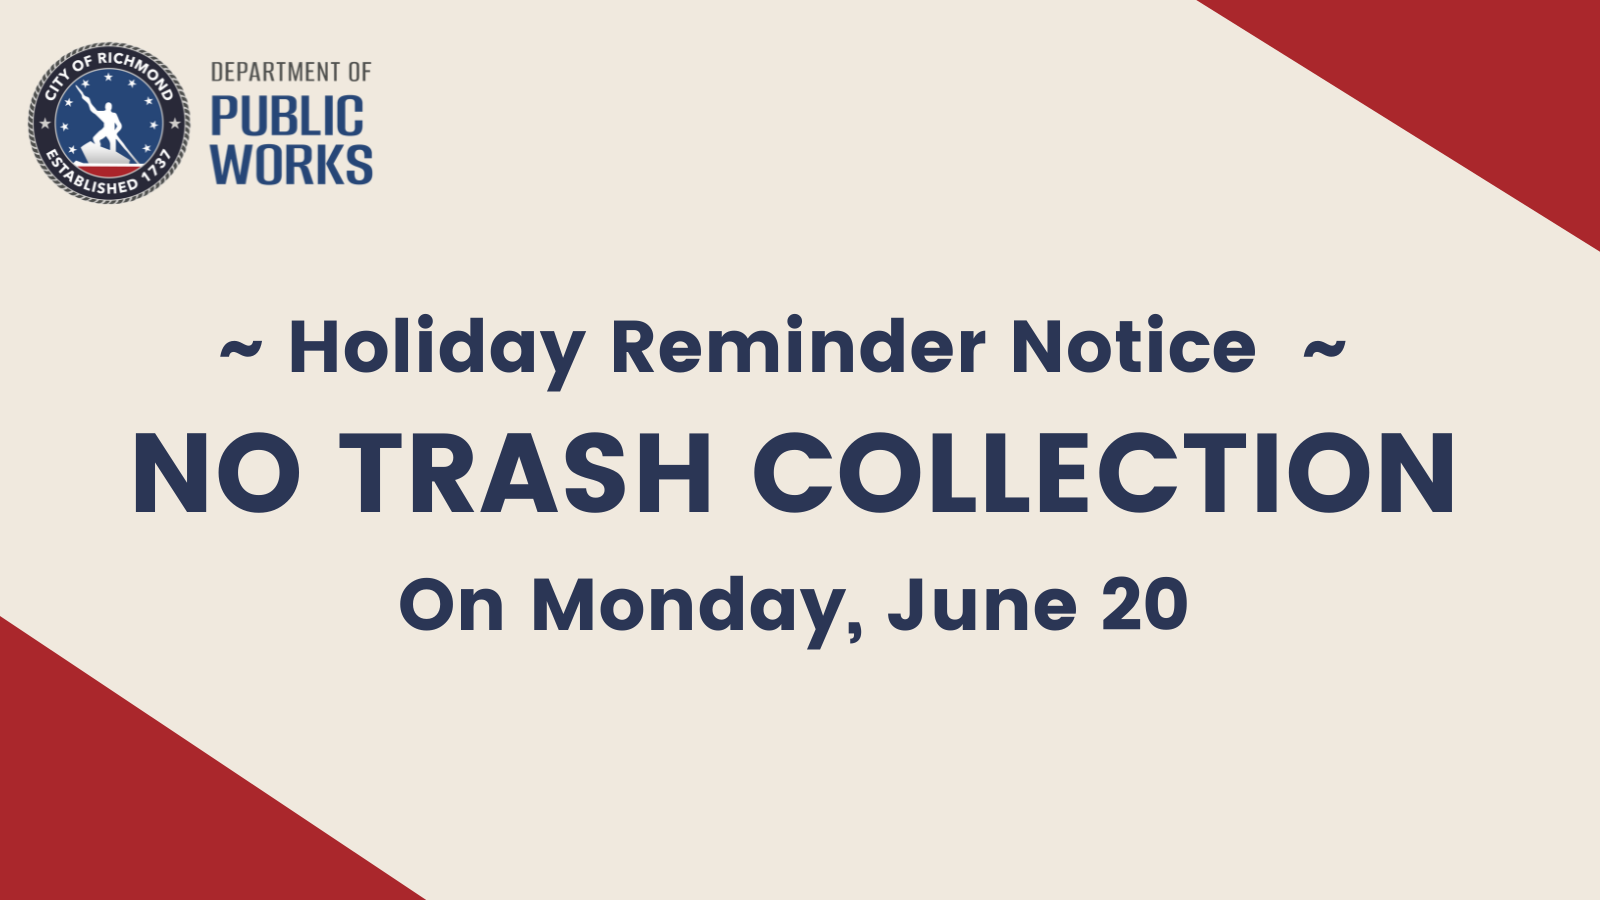 Holiday Reminder - No Trash Collection